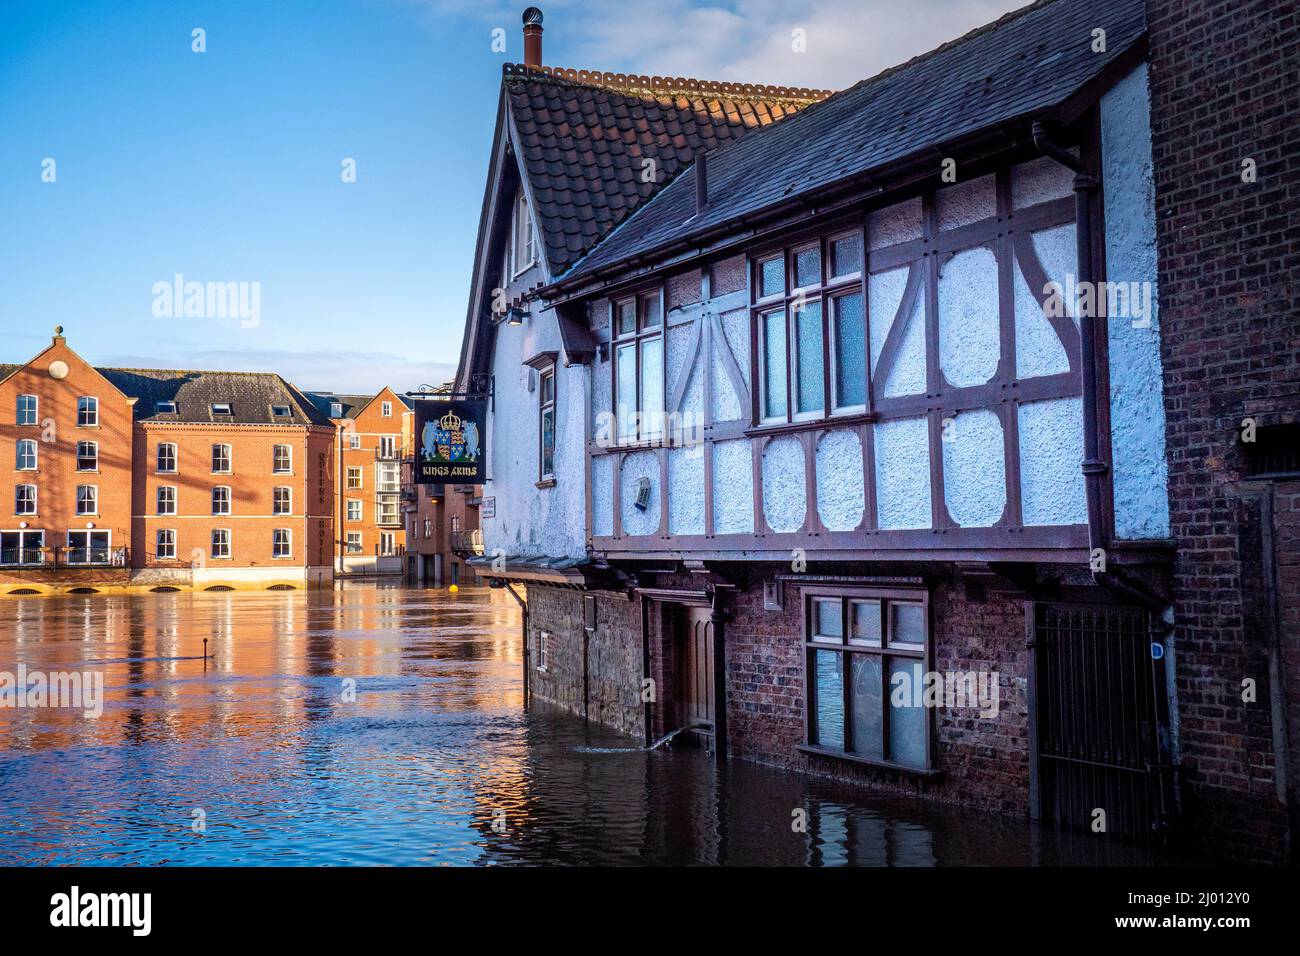 River Ouse floods York, UK Stock Photo